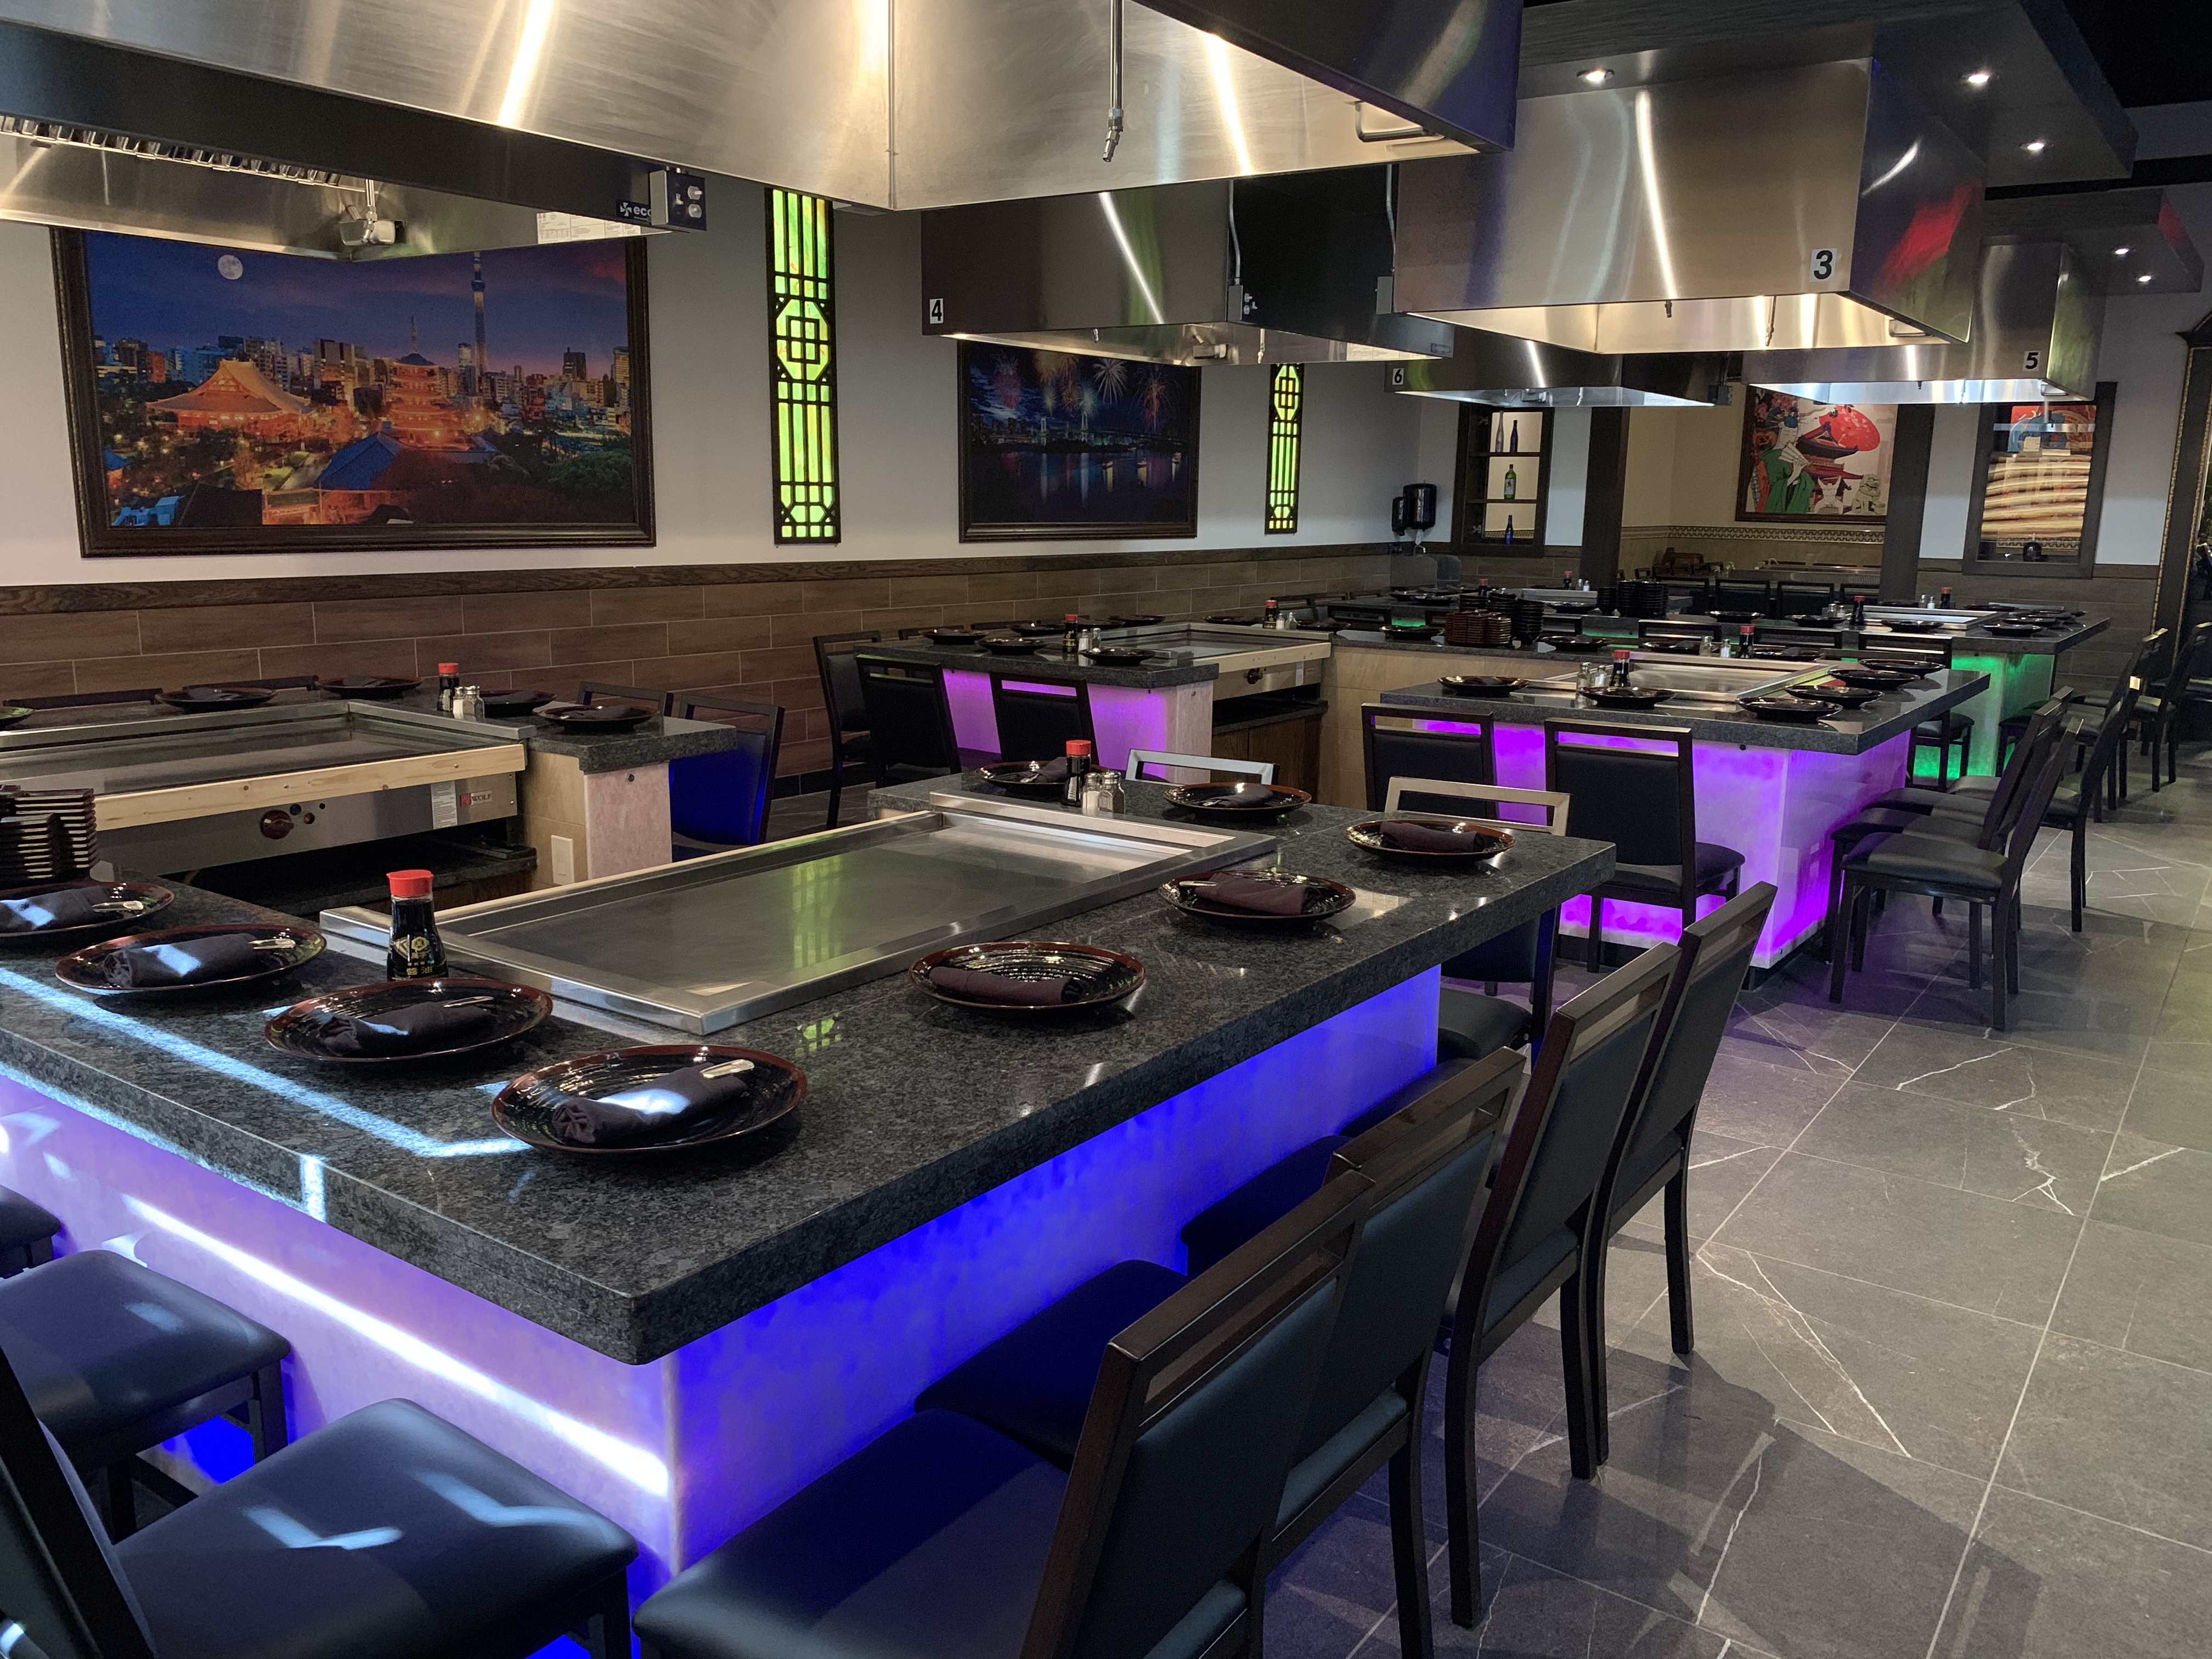 Customer Reviews - Sake sushi hibachi steakhouse, Sushi & Japanese Steakhouse - prosper TX